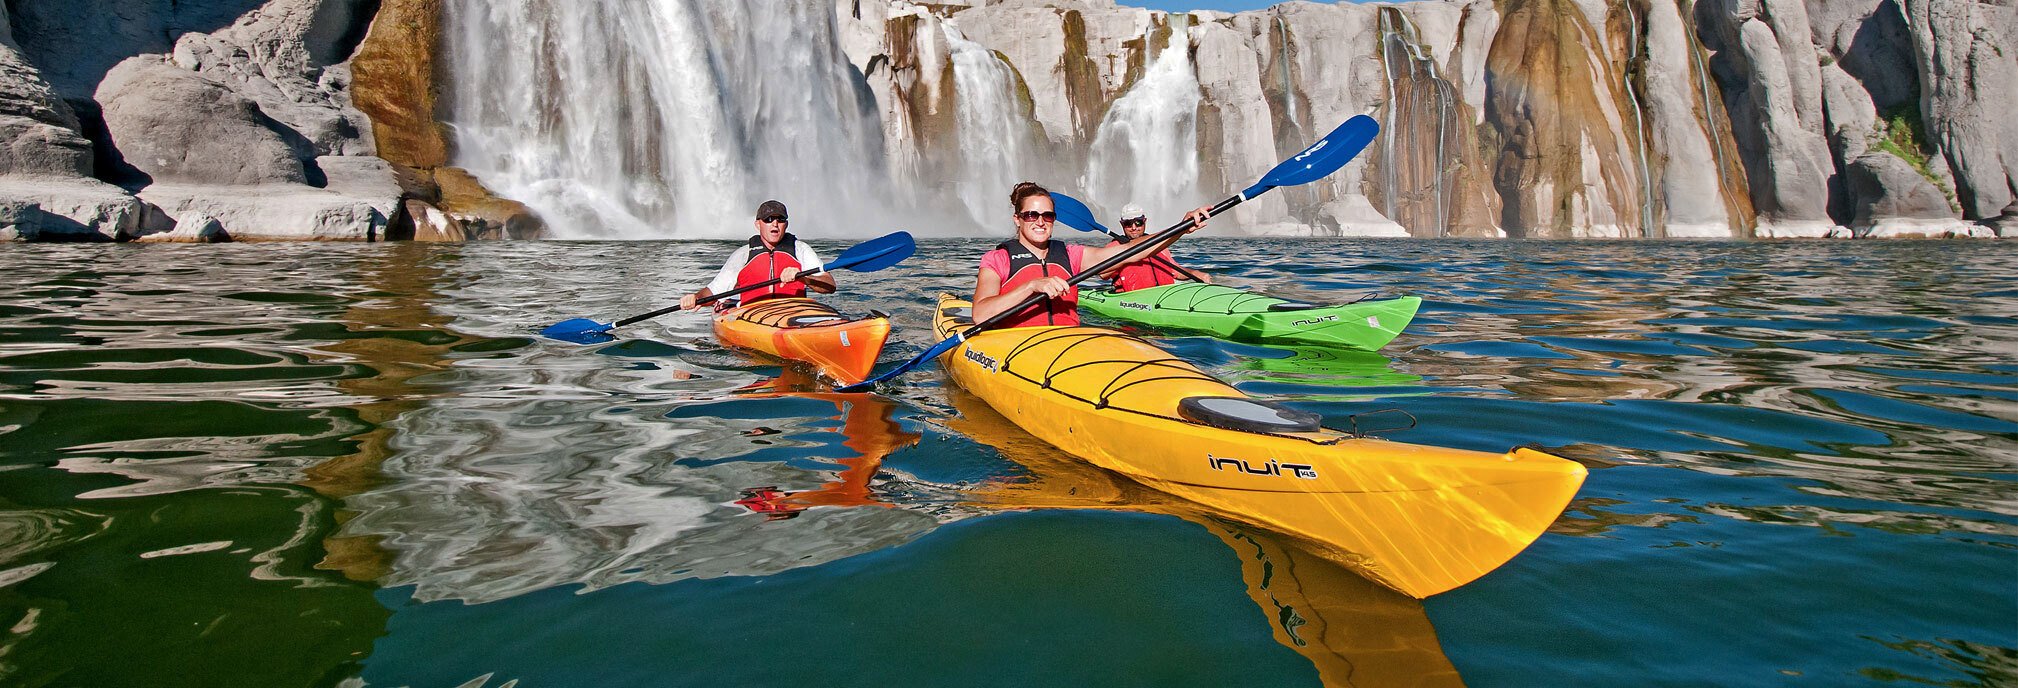 Kayaking Shoshone Falls, Twin Falls, Idaho